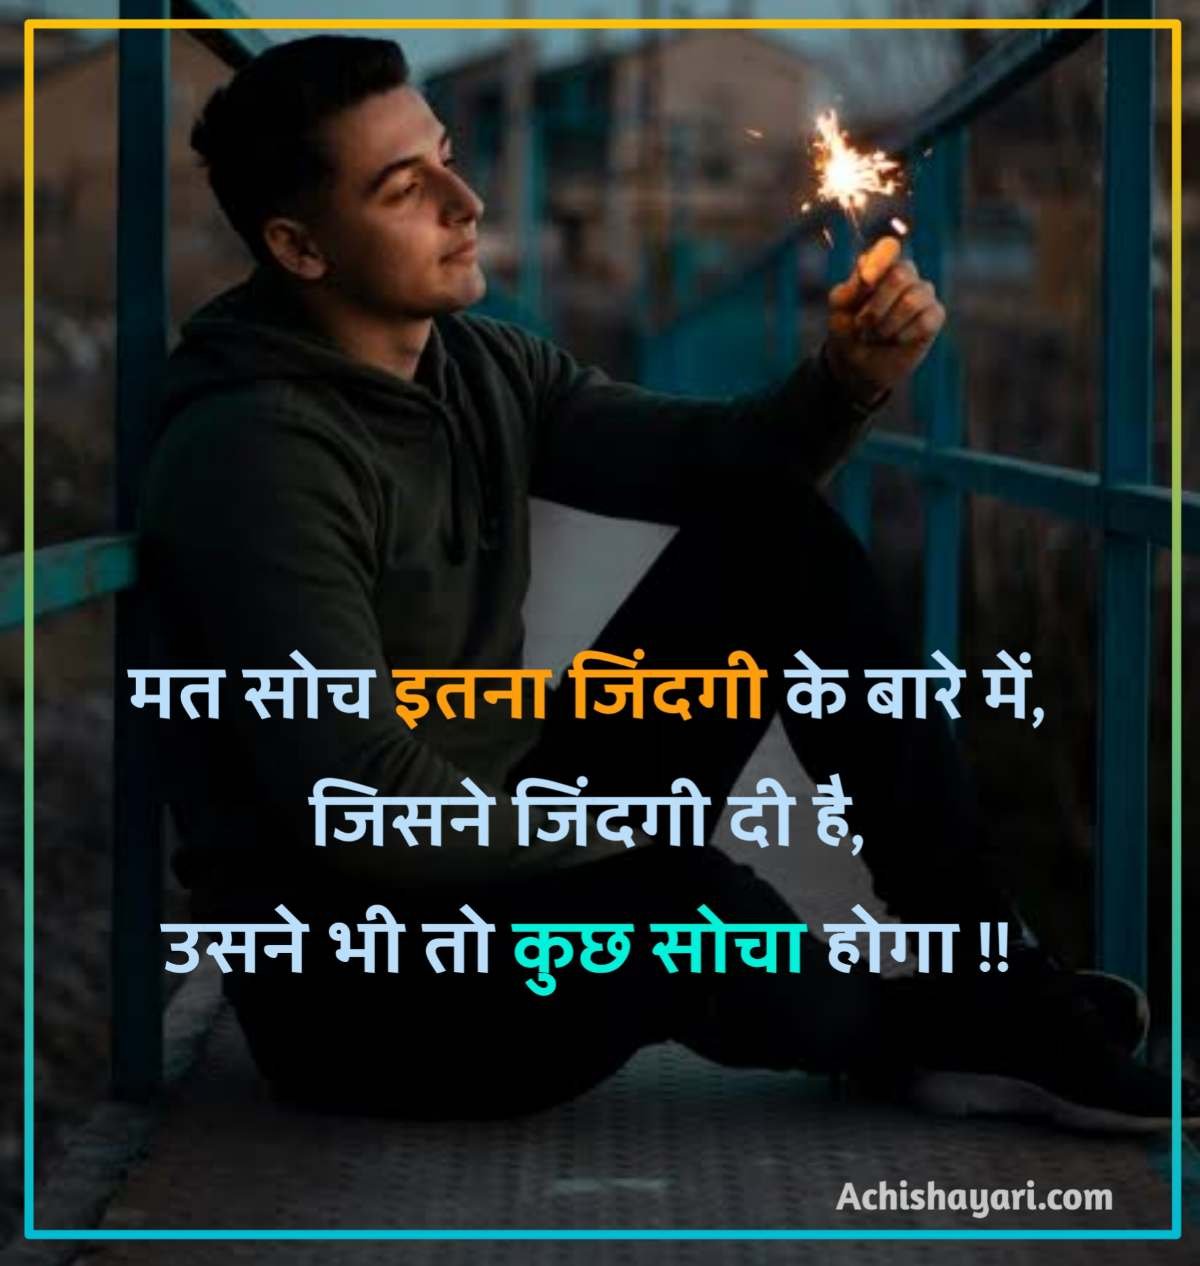 Motivational Suvichar in Hindi image